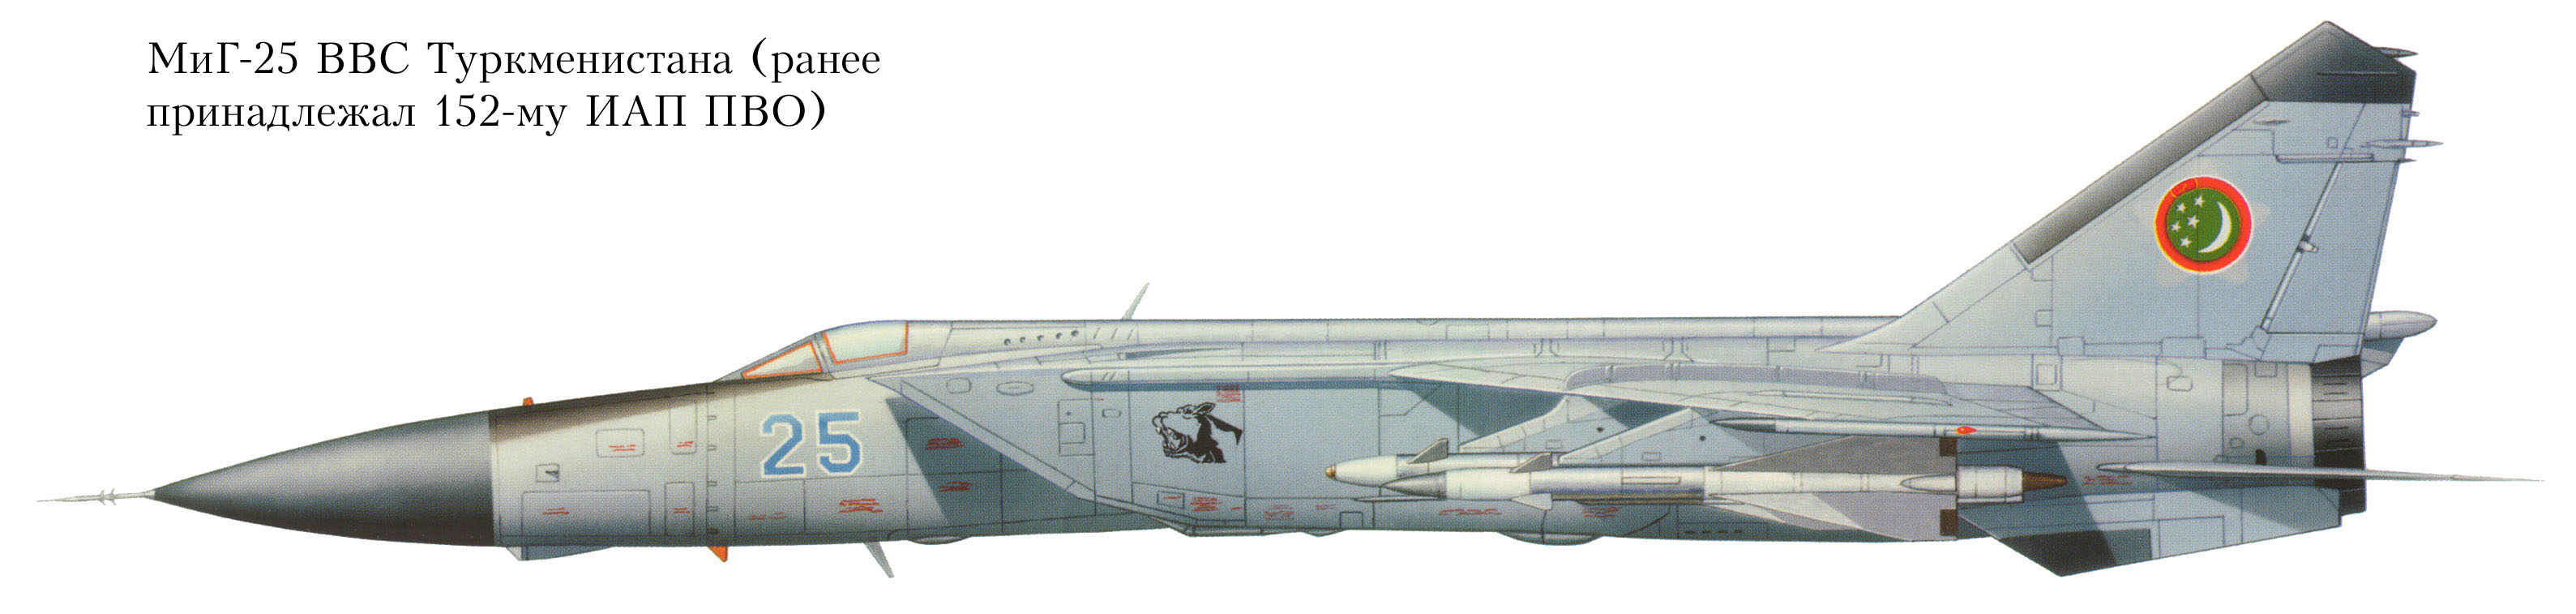 MIG-25 Foxbat (3)